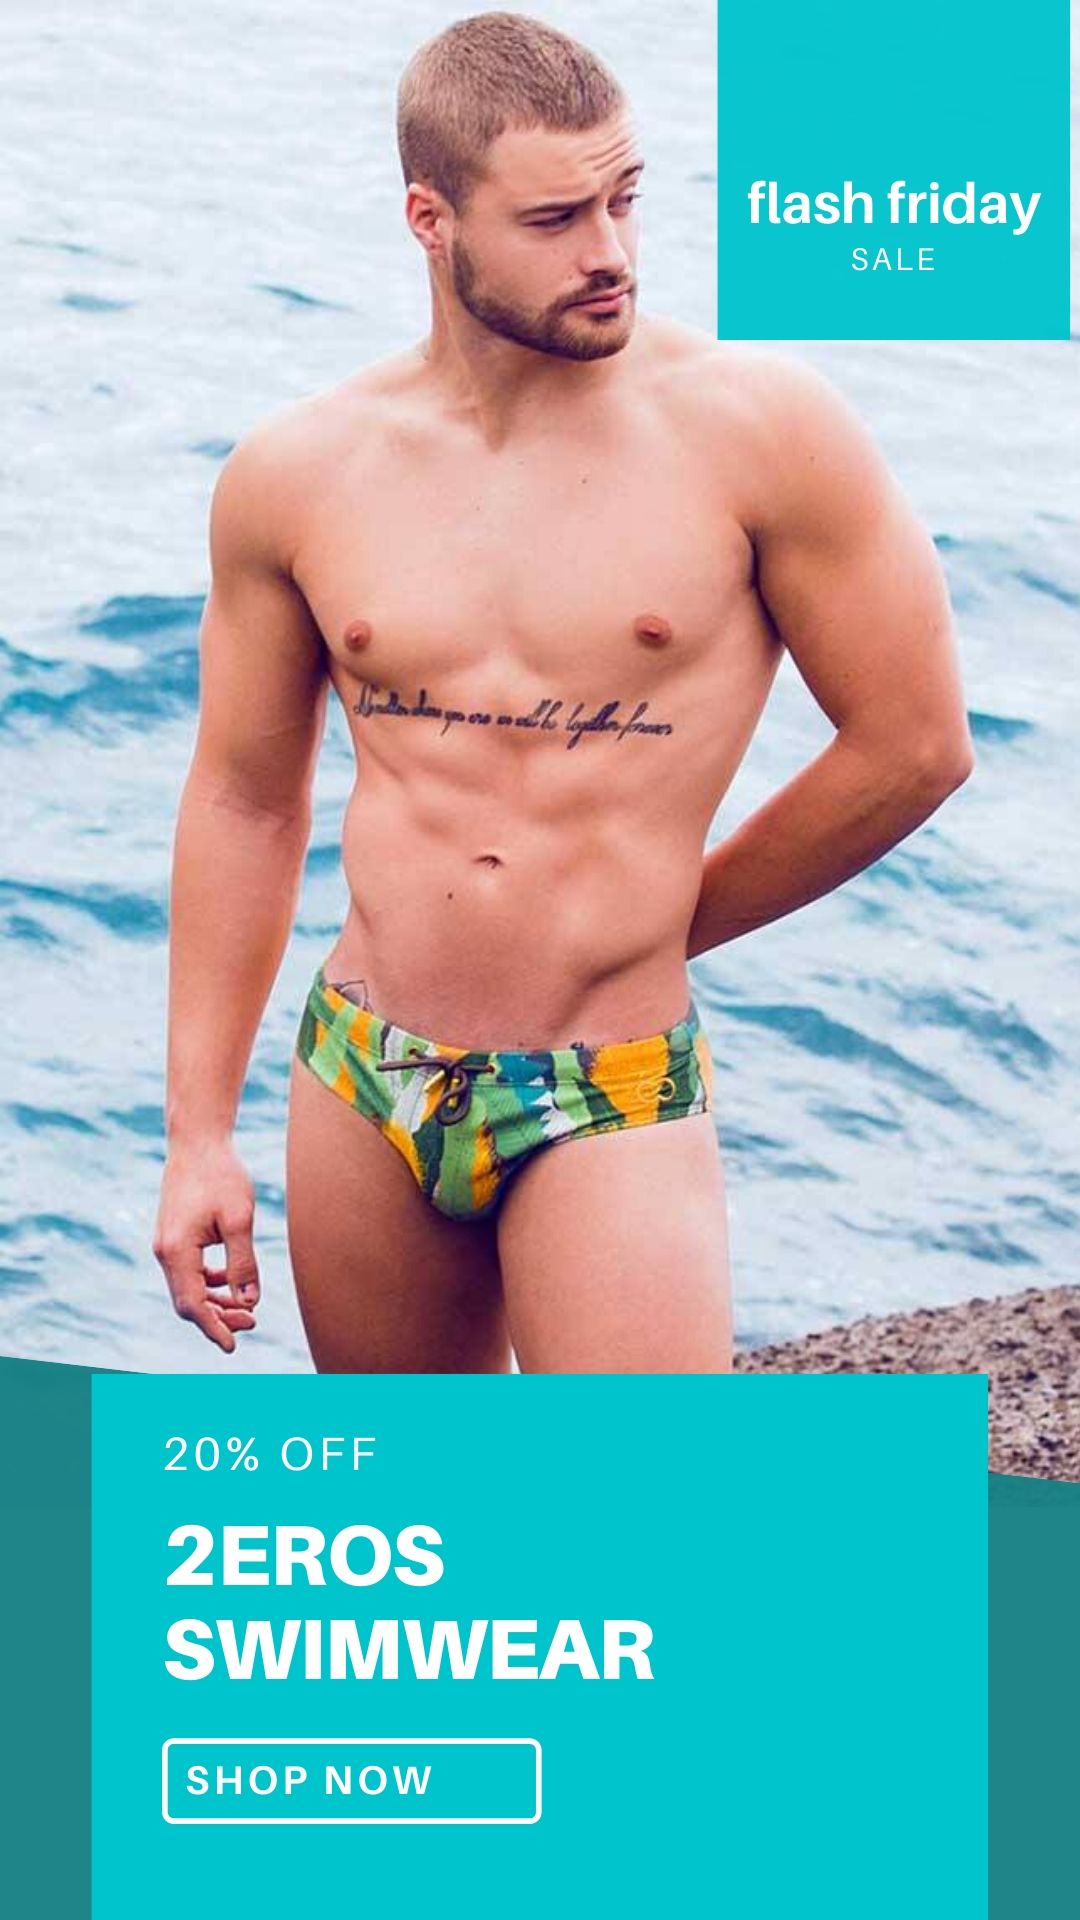 Get 20% off 2EROS Swimwear